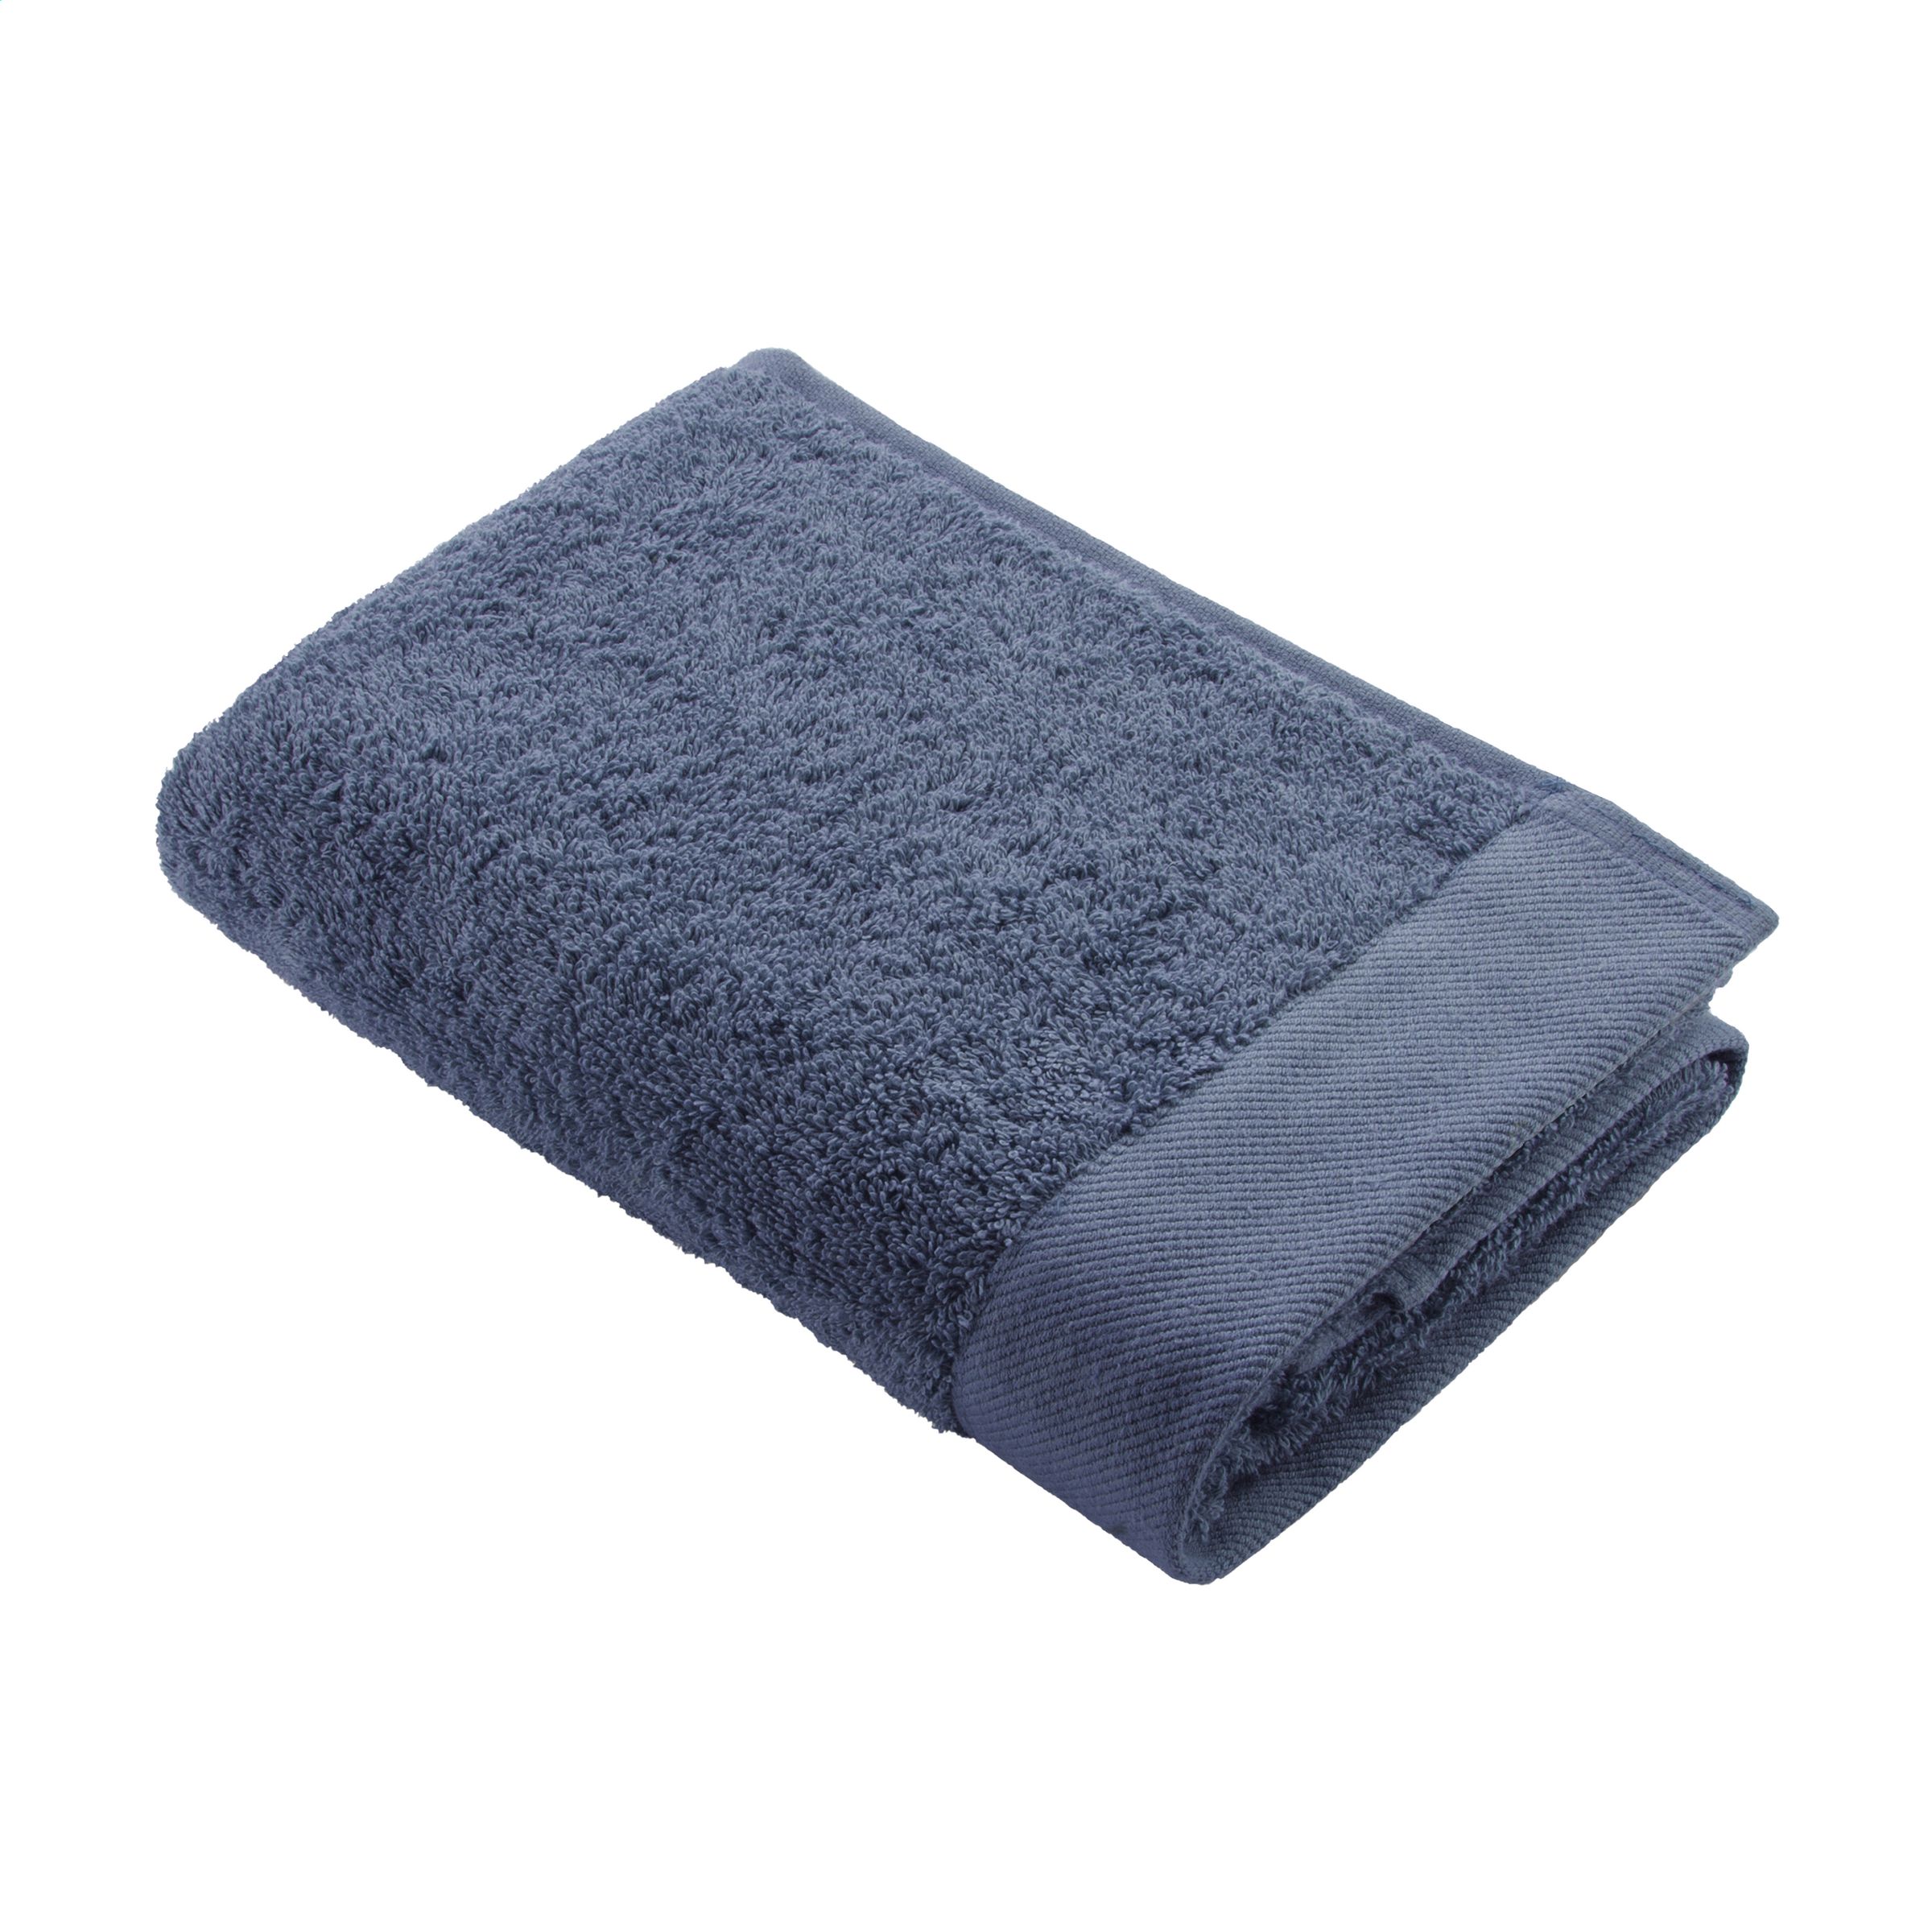 Walra Stylish Recycled Cotton Towel - Rochdale